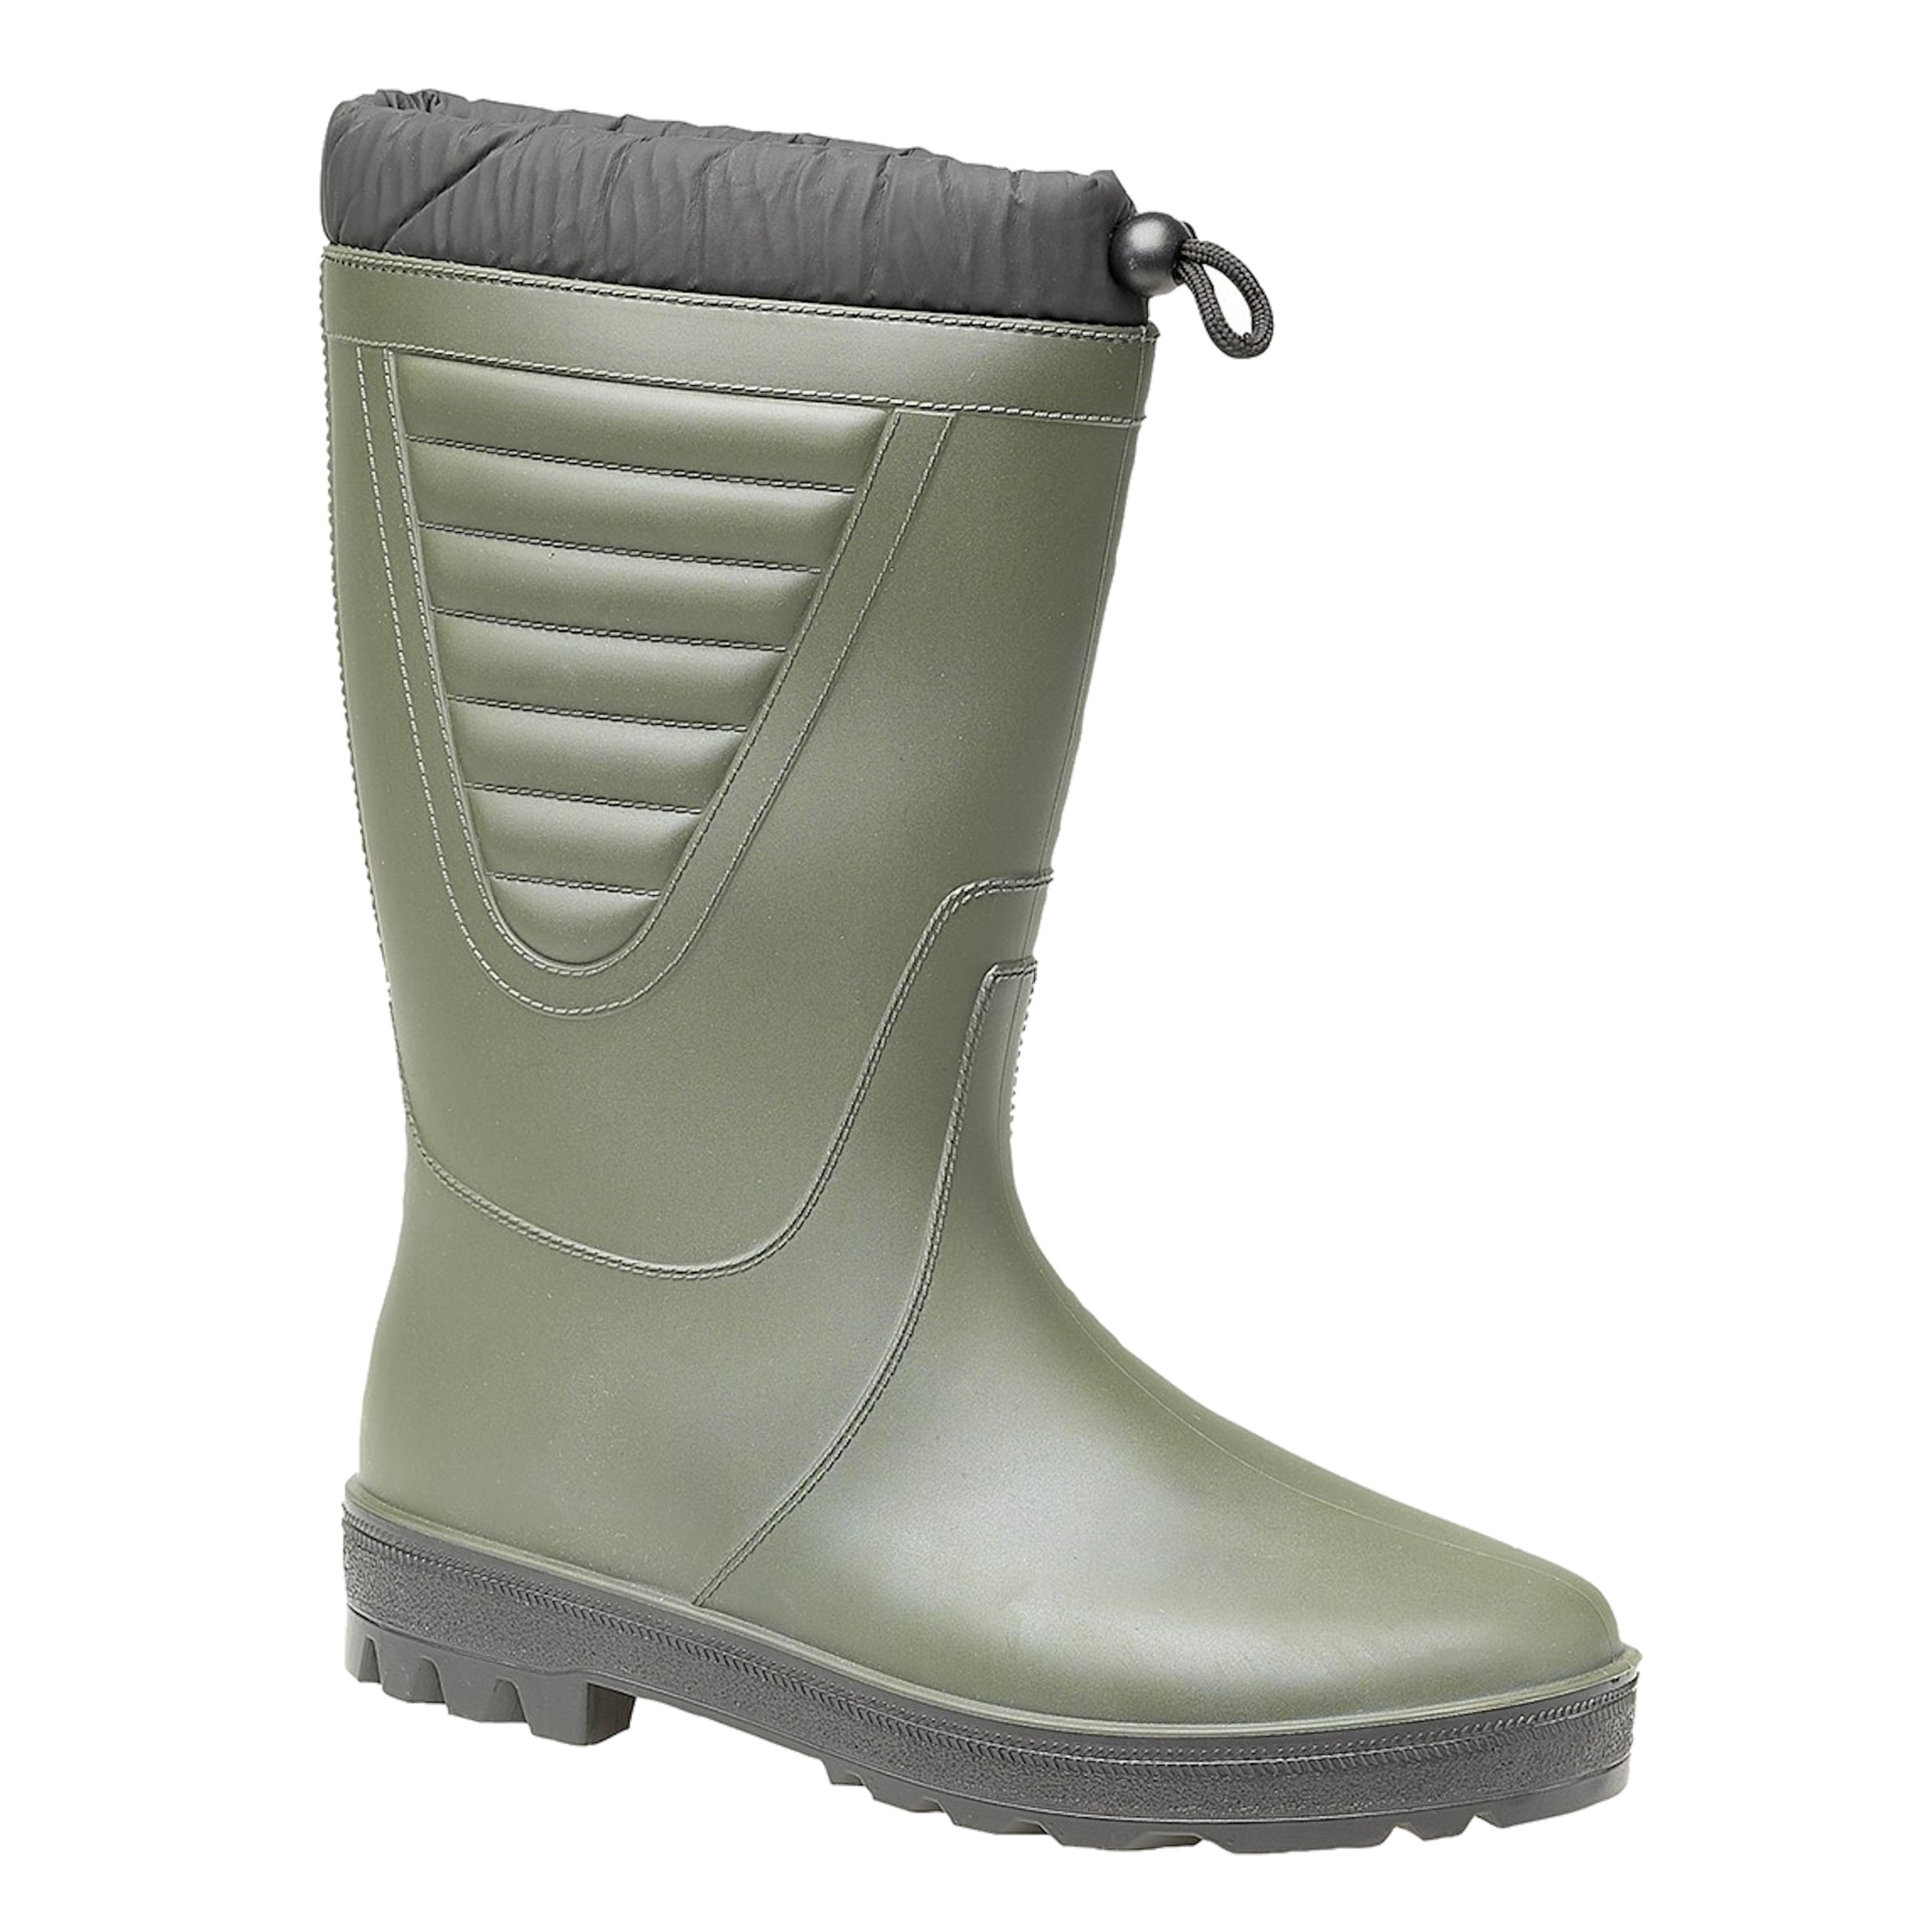 Stormwells Alpine Thermal Wellington Boots Water Resistant Fleece Lined Wellies 